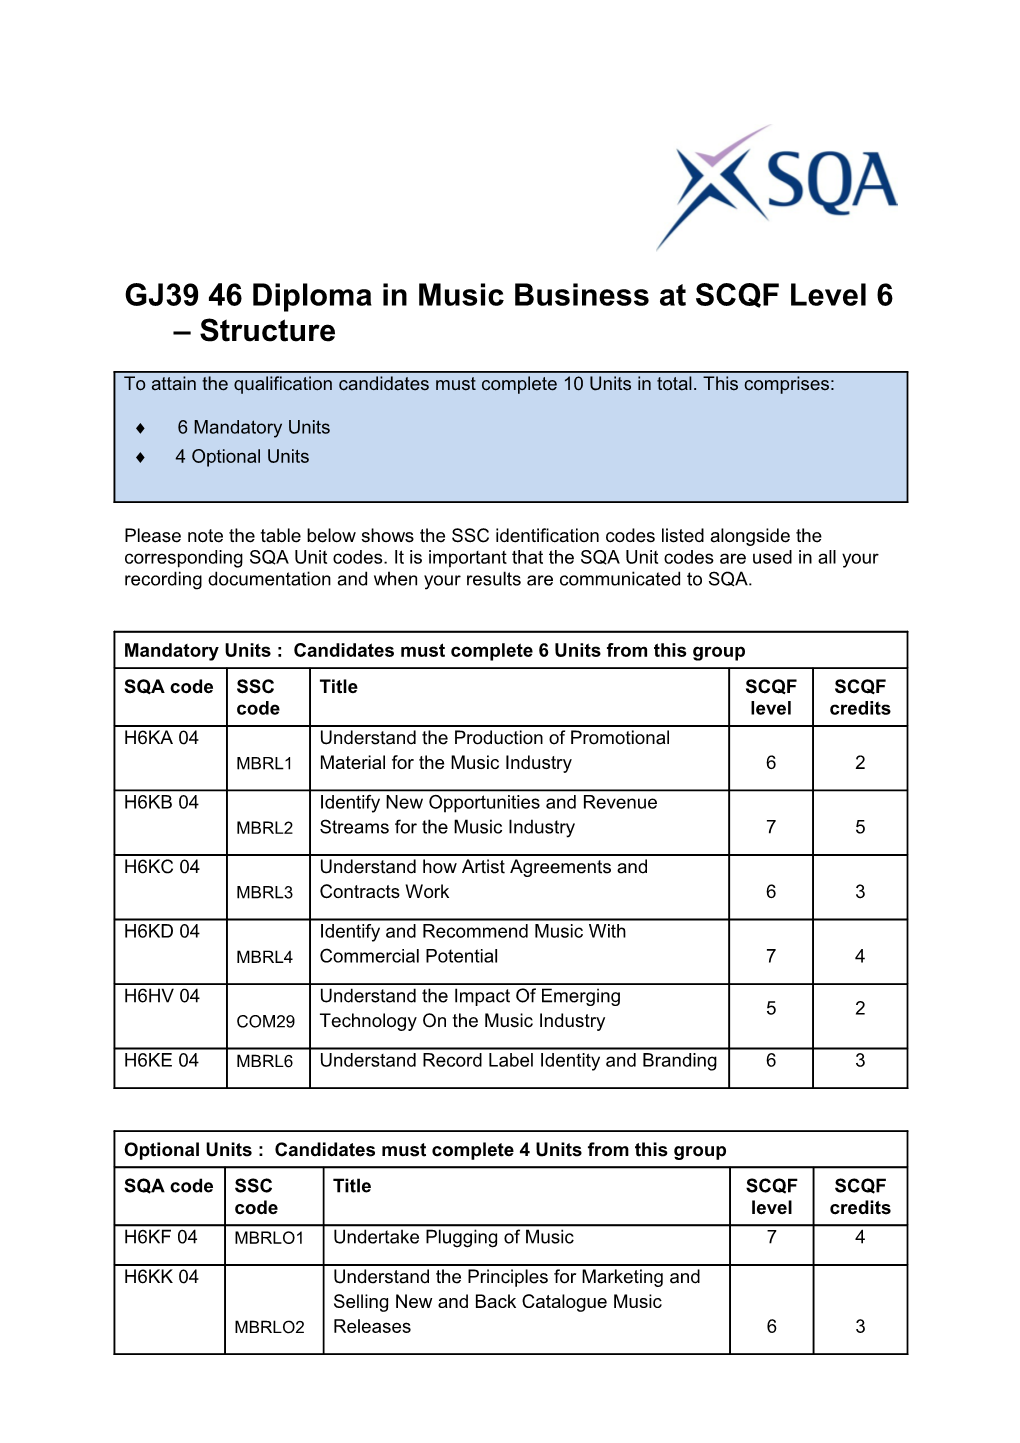 GJ39 46Diploma in Music Businessat SCQF Level 6 Structure